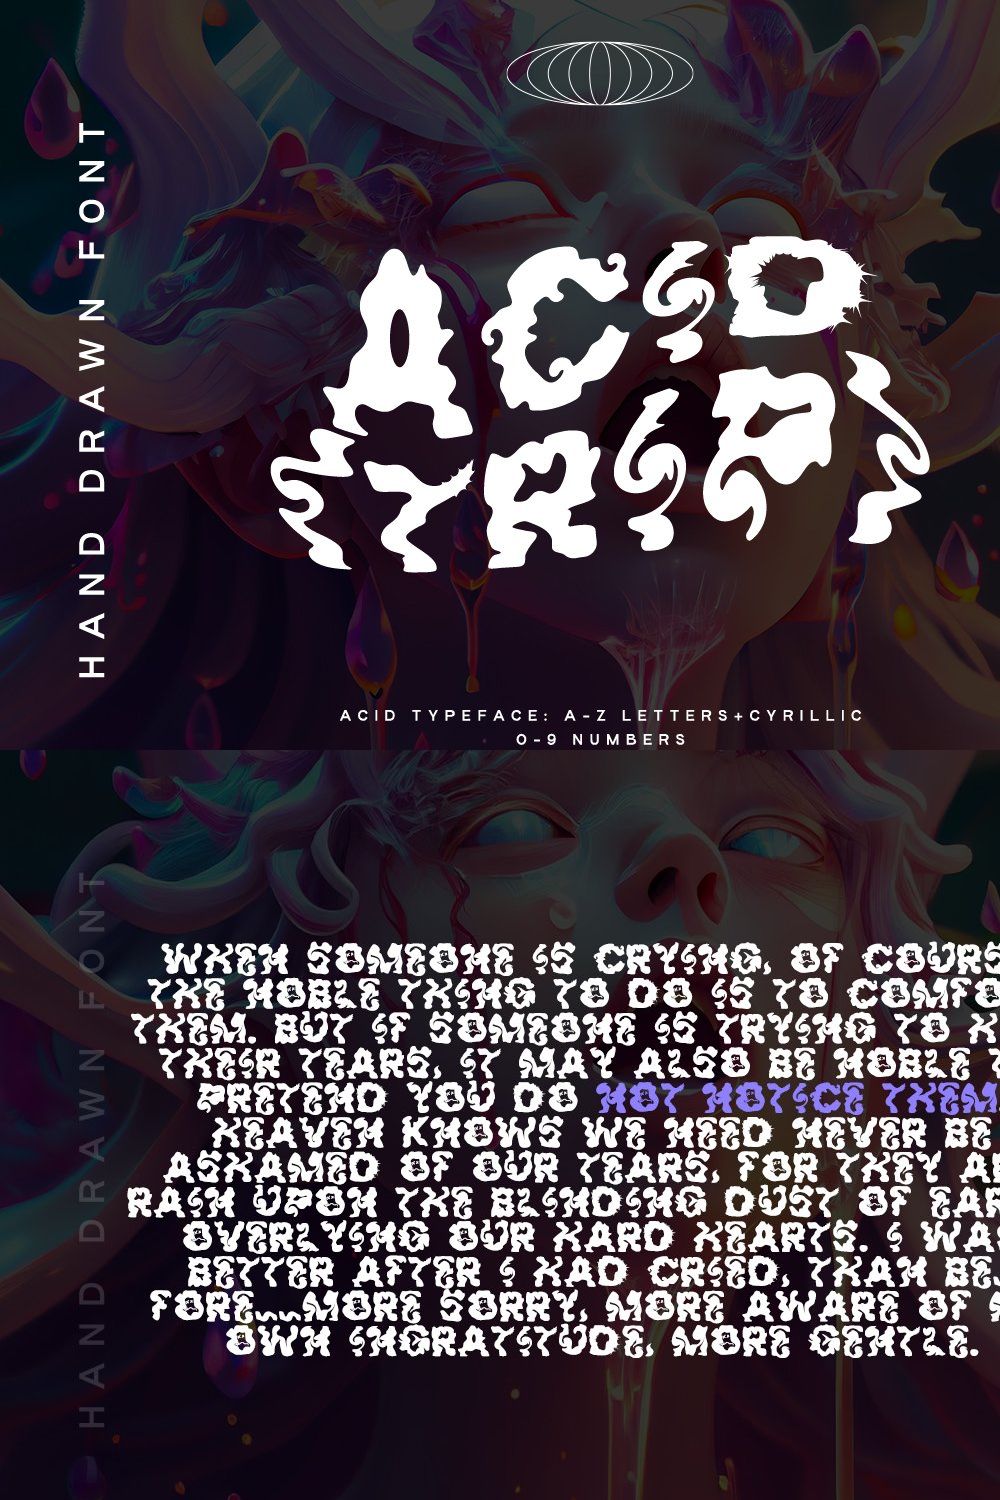 Acid(Trip) - Acid typeface +Cyrillic pinterest preview image.